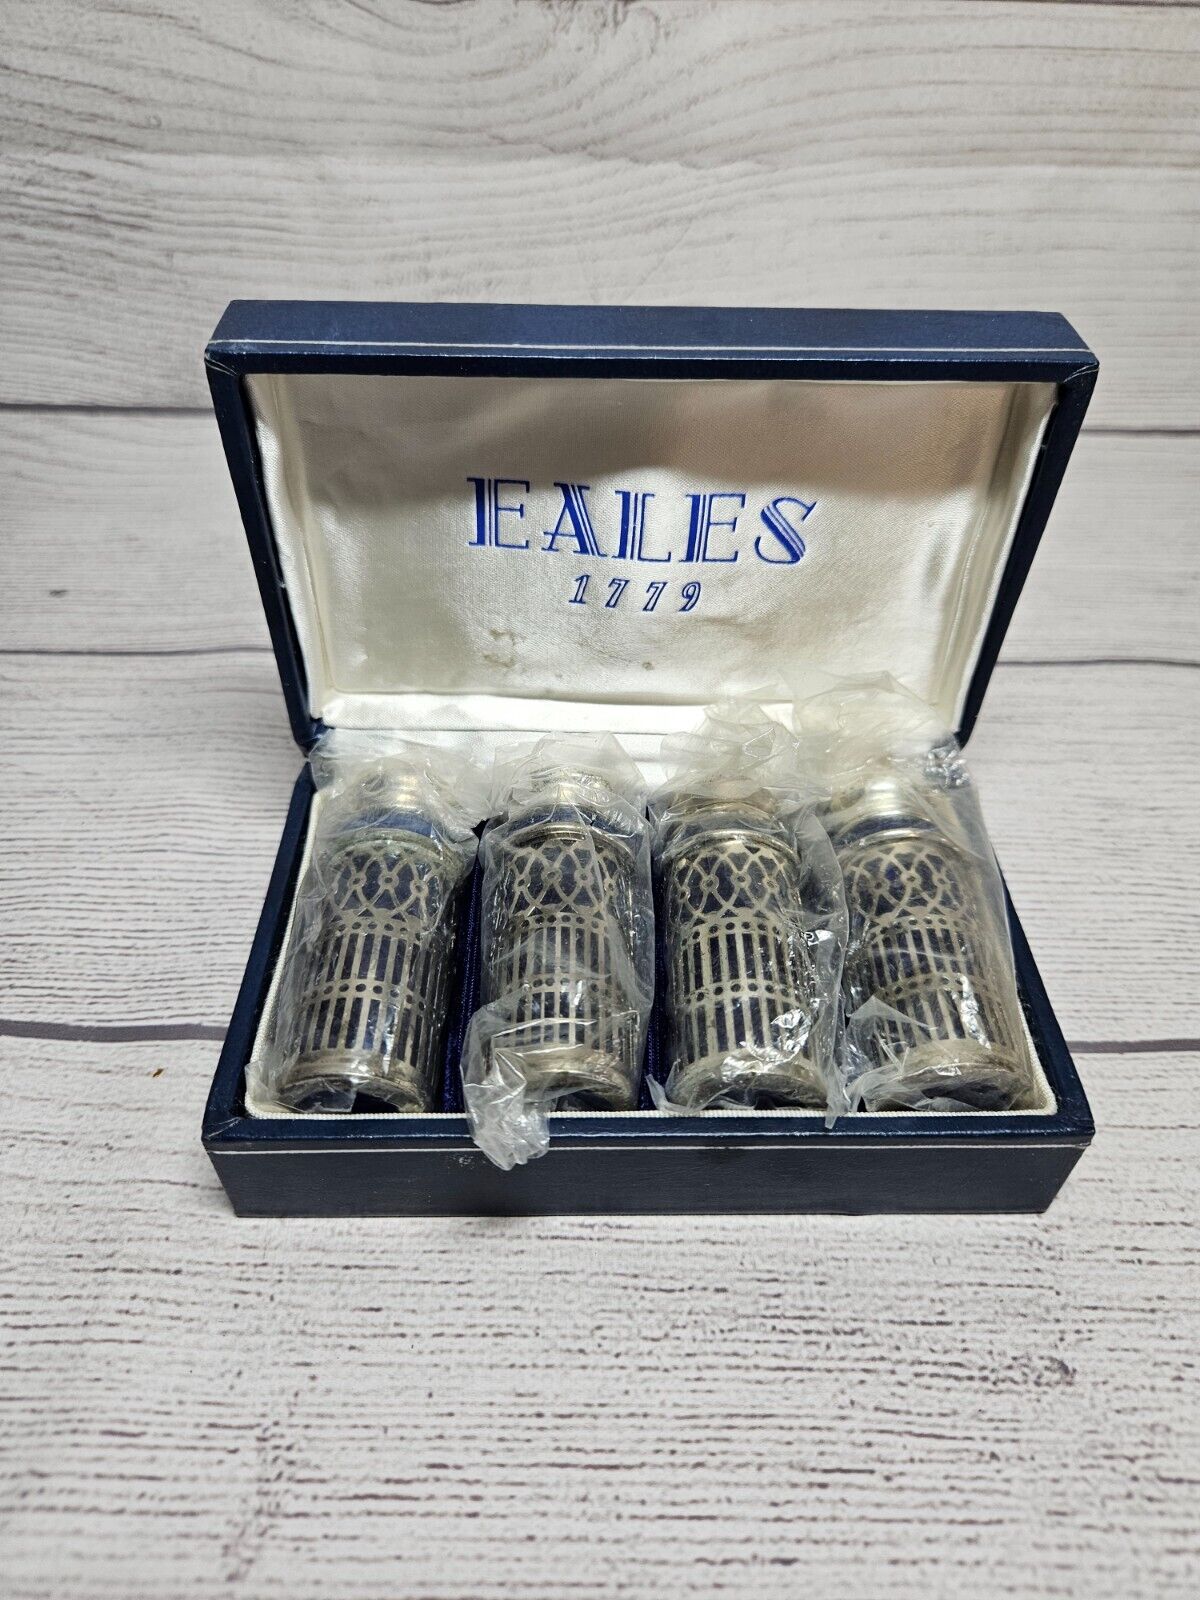 Vintage Cobalt Blue Glass & Silver Plate Salt & Pepper Shakers Eales 1779 w/Box